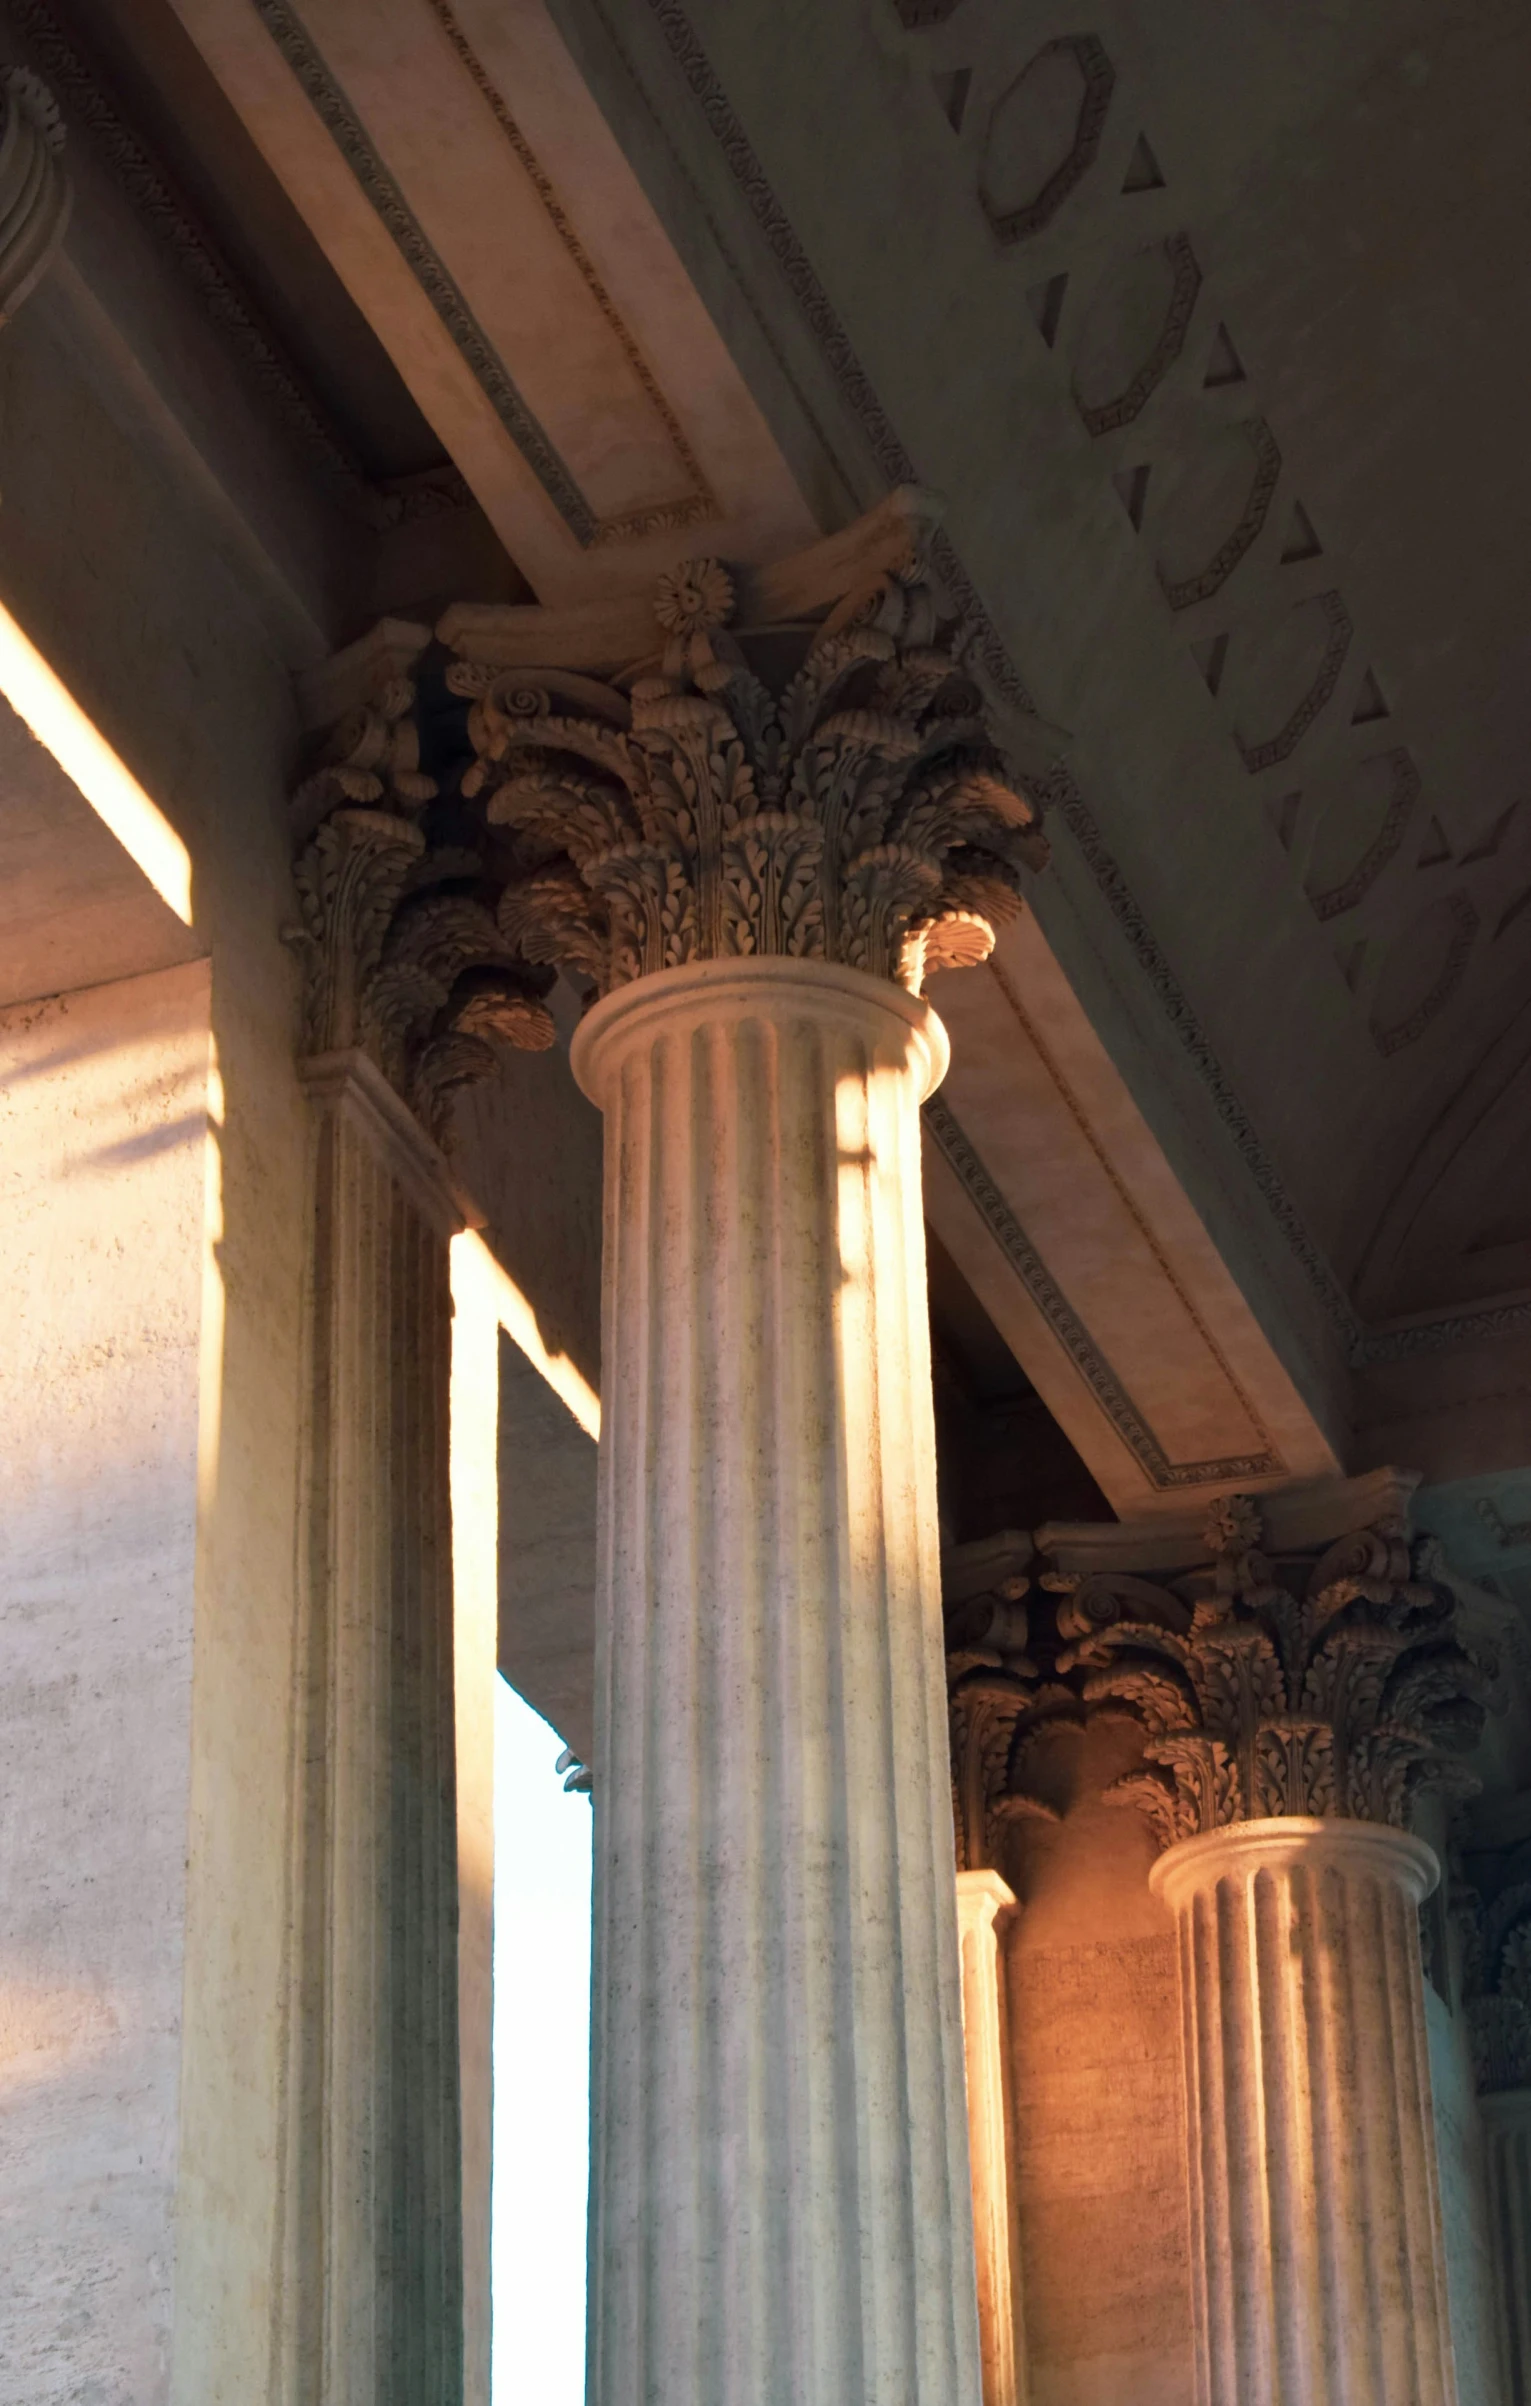 a row of stone pillars with pillars below